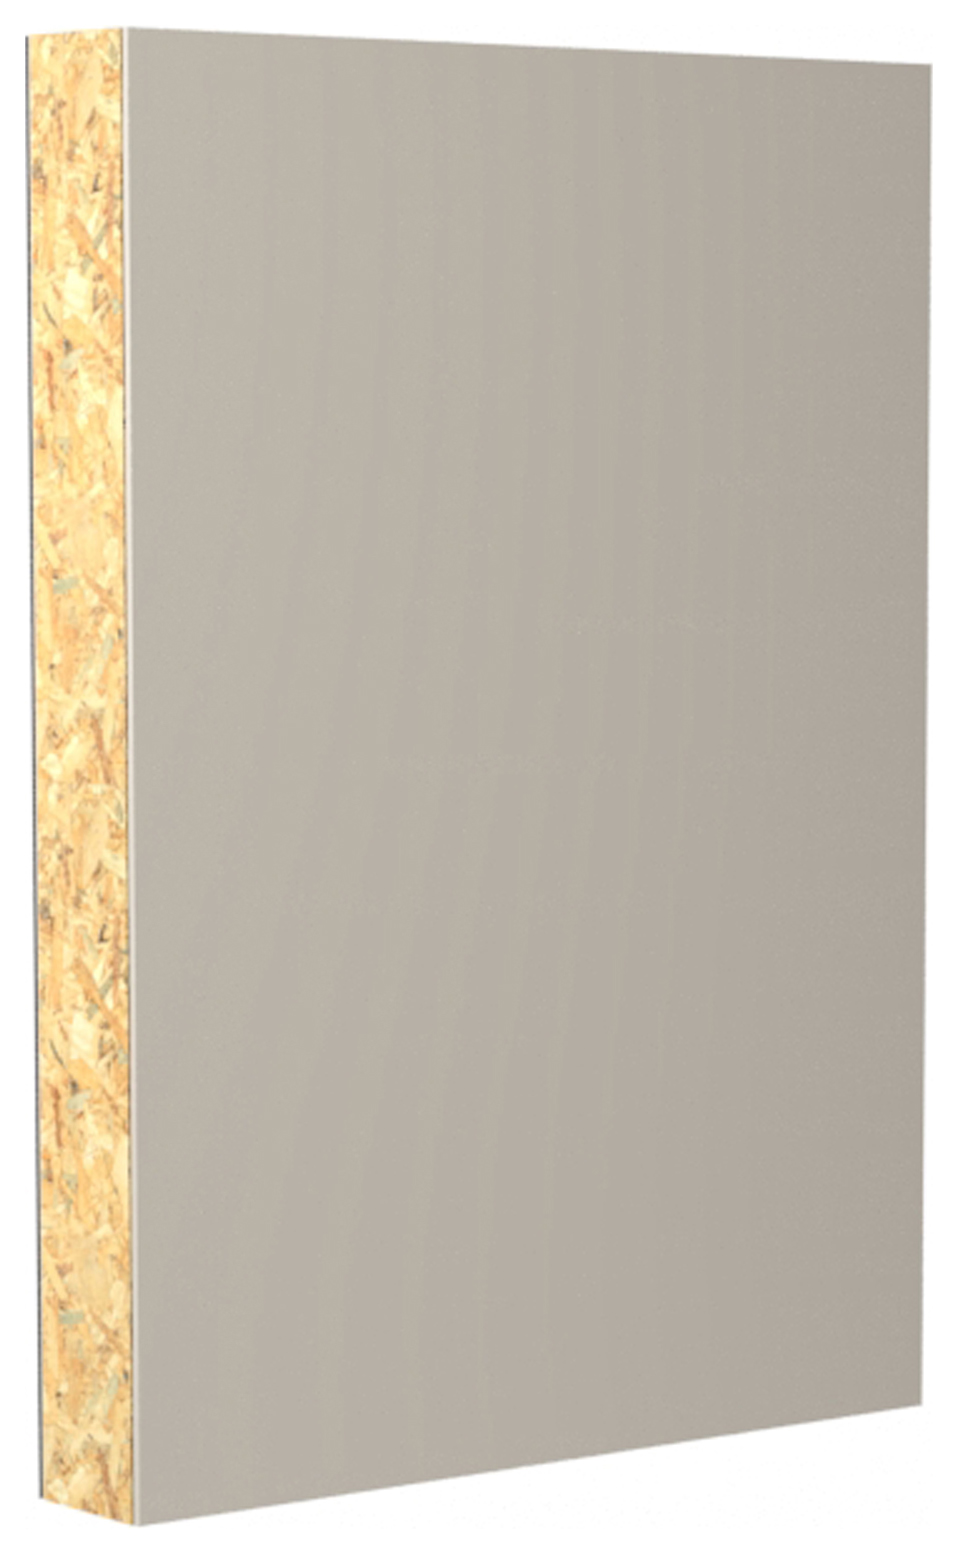 Image of Wickes Ohio Stone Colour Block Sample 150mm x 18mm x 100mm